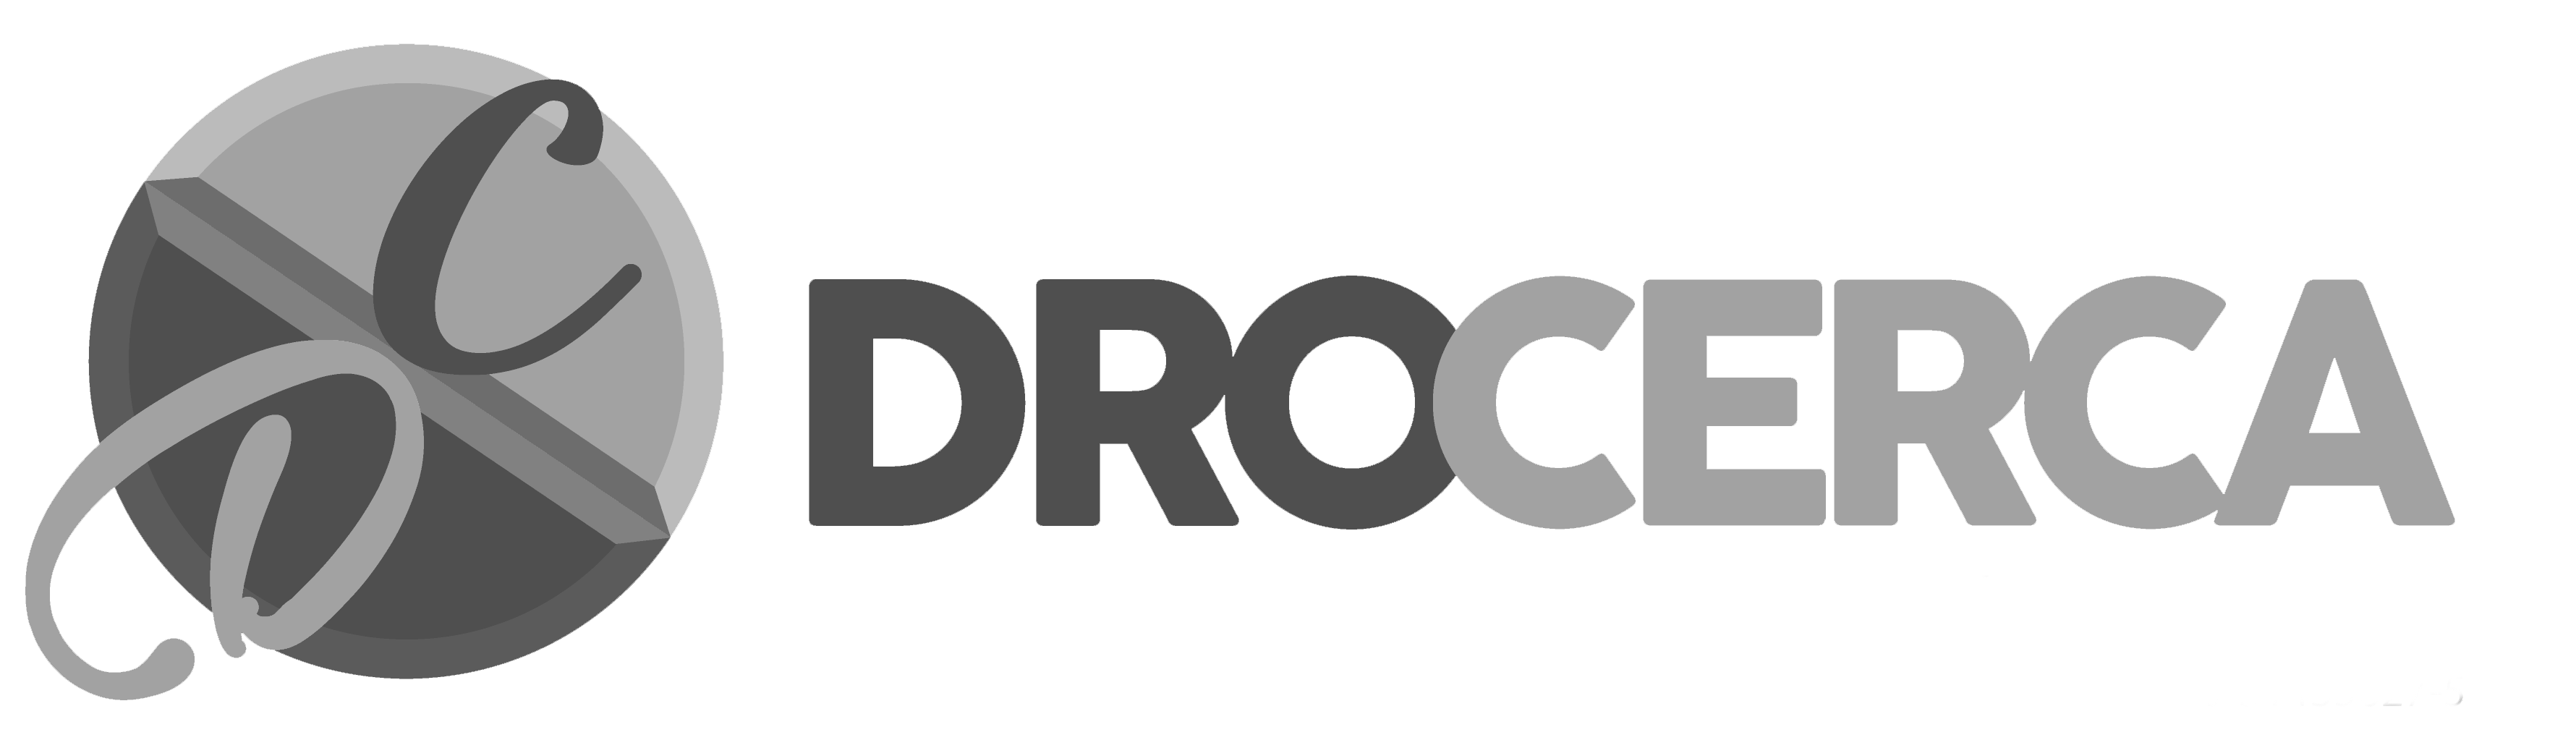 Logotipo-DROCERCA-con-rif-con-borde-blanco